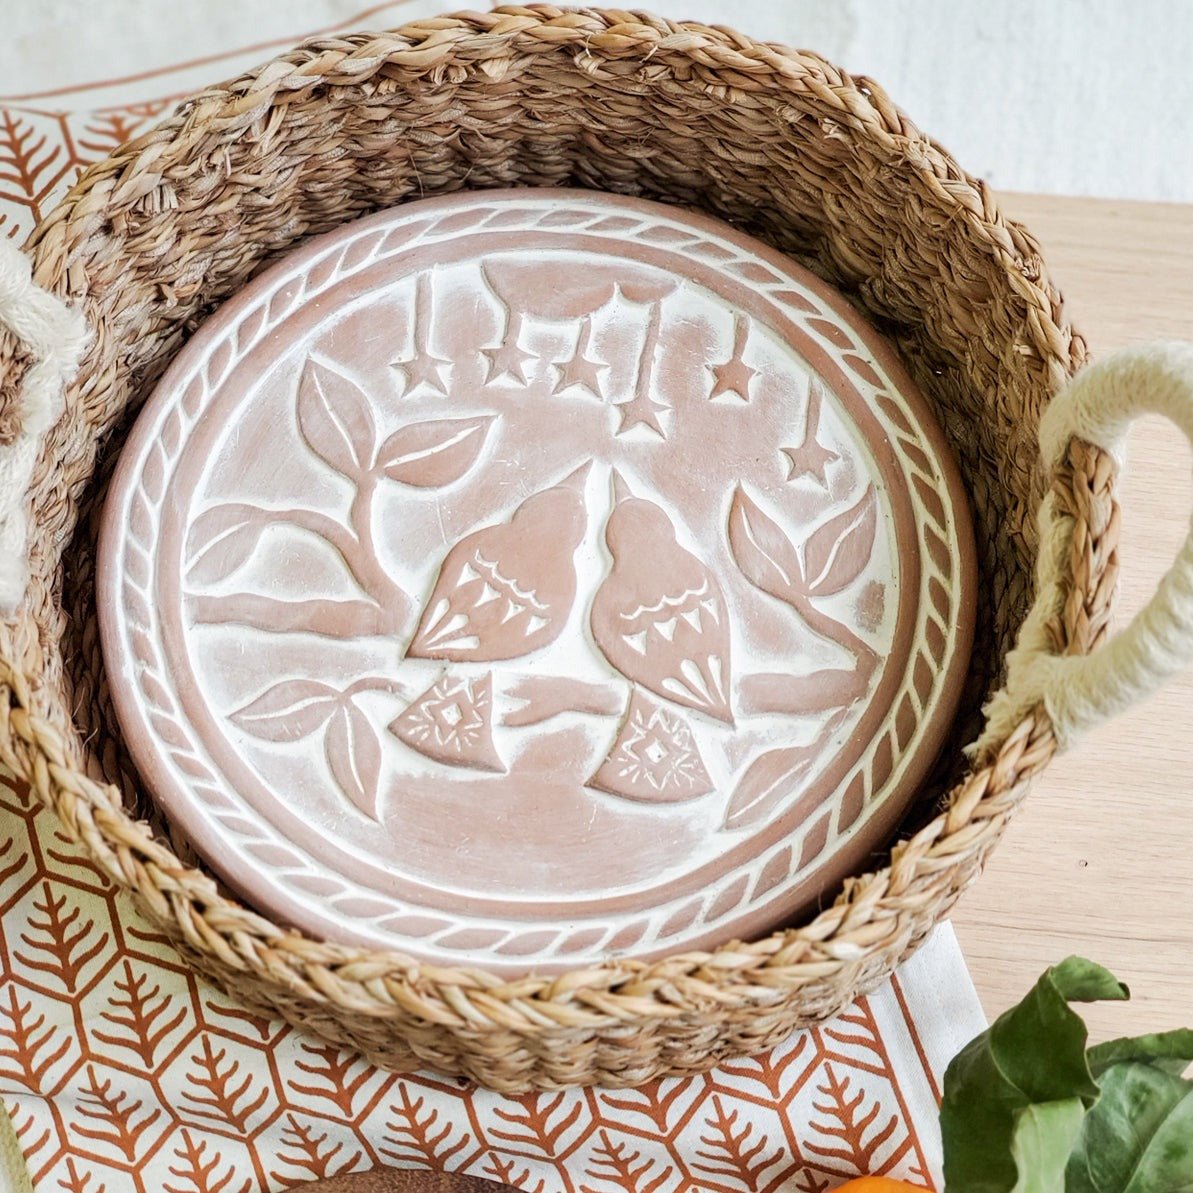 KORISSA Bread Warmer & Basket Gift Set with Tea Towel - Lovebird Round - lily & onyx